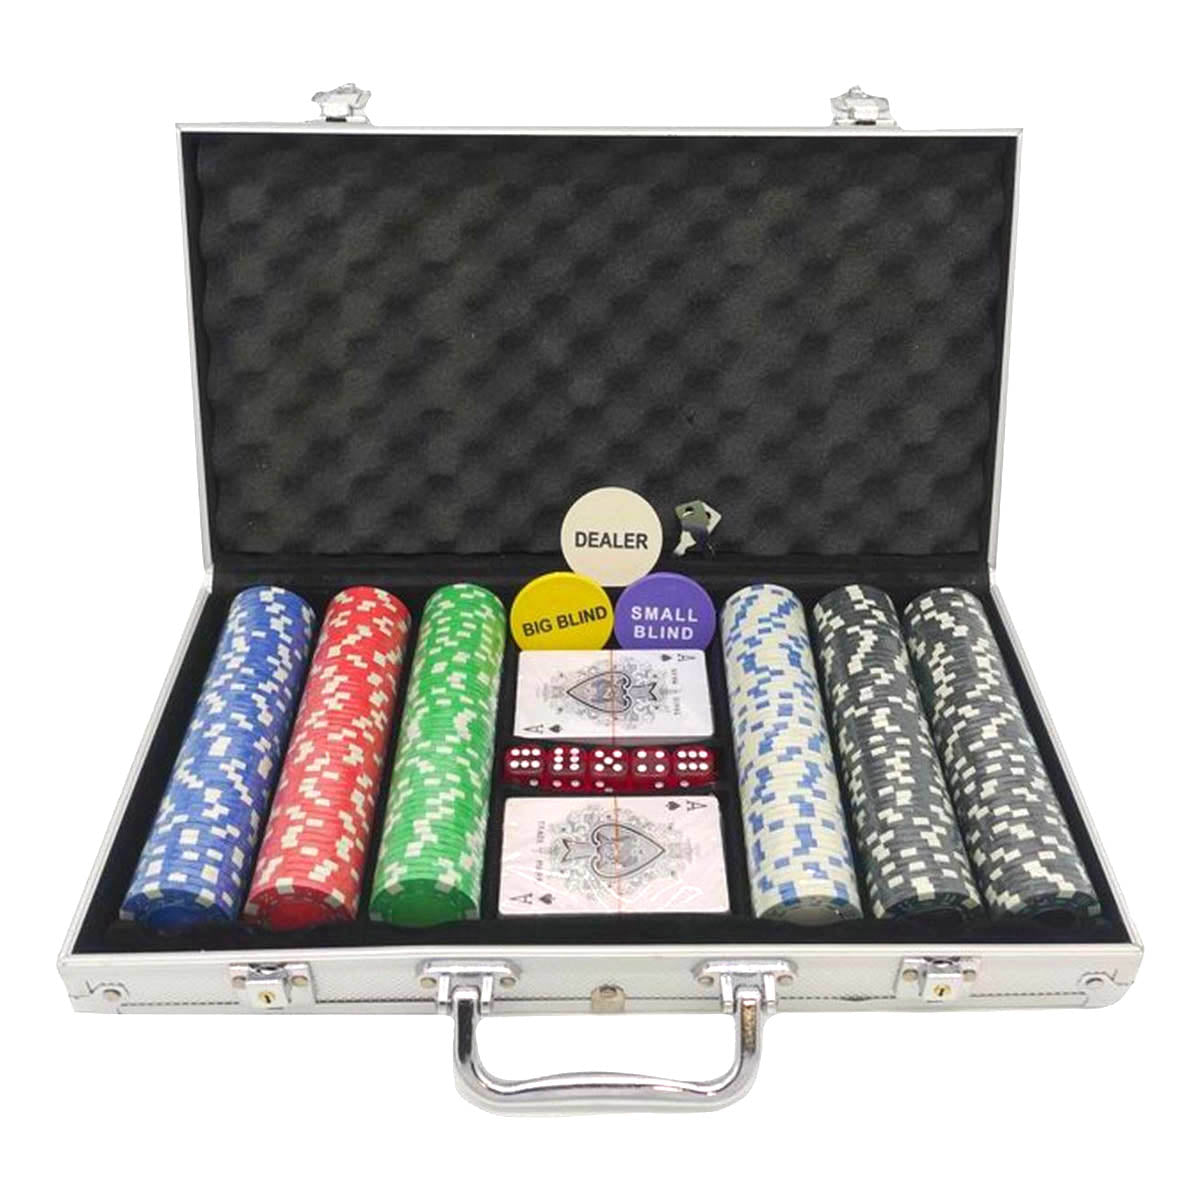 Ariko Deluxe-Pokerset – Mit Kartenmischer – Aluminiumkoffer – Profi-Pokerset mit 300 Chips und Pokerkarten – Pokerkoffer